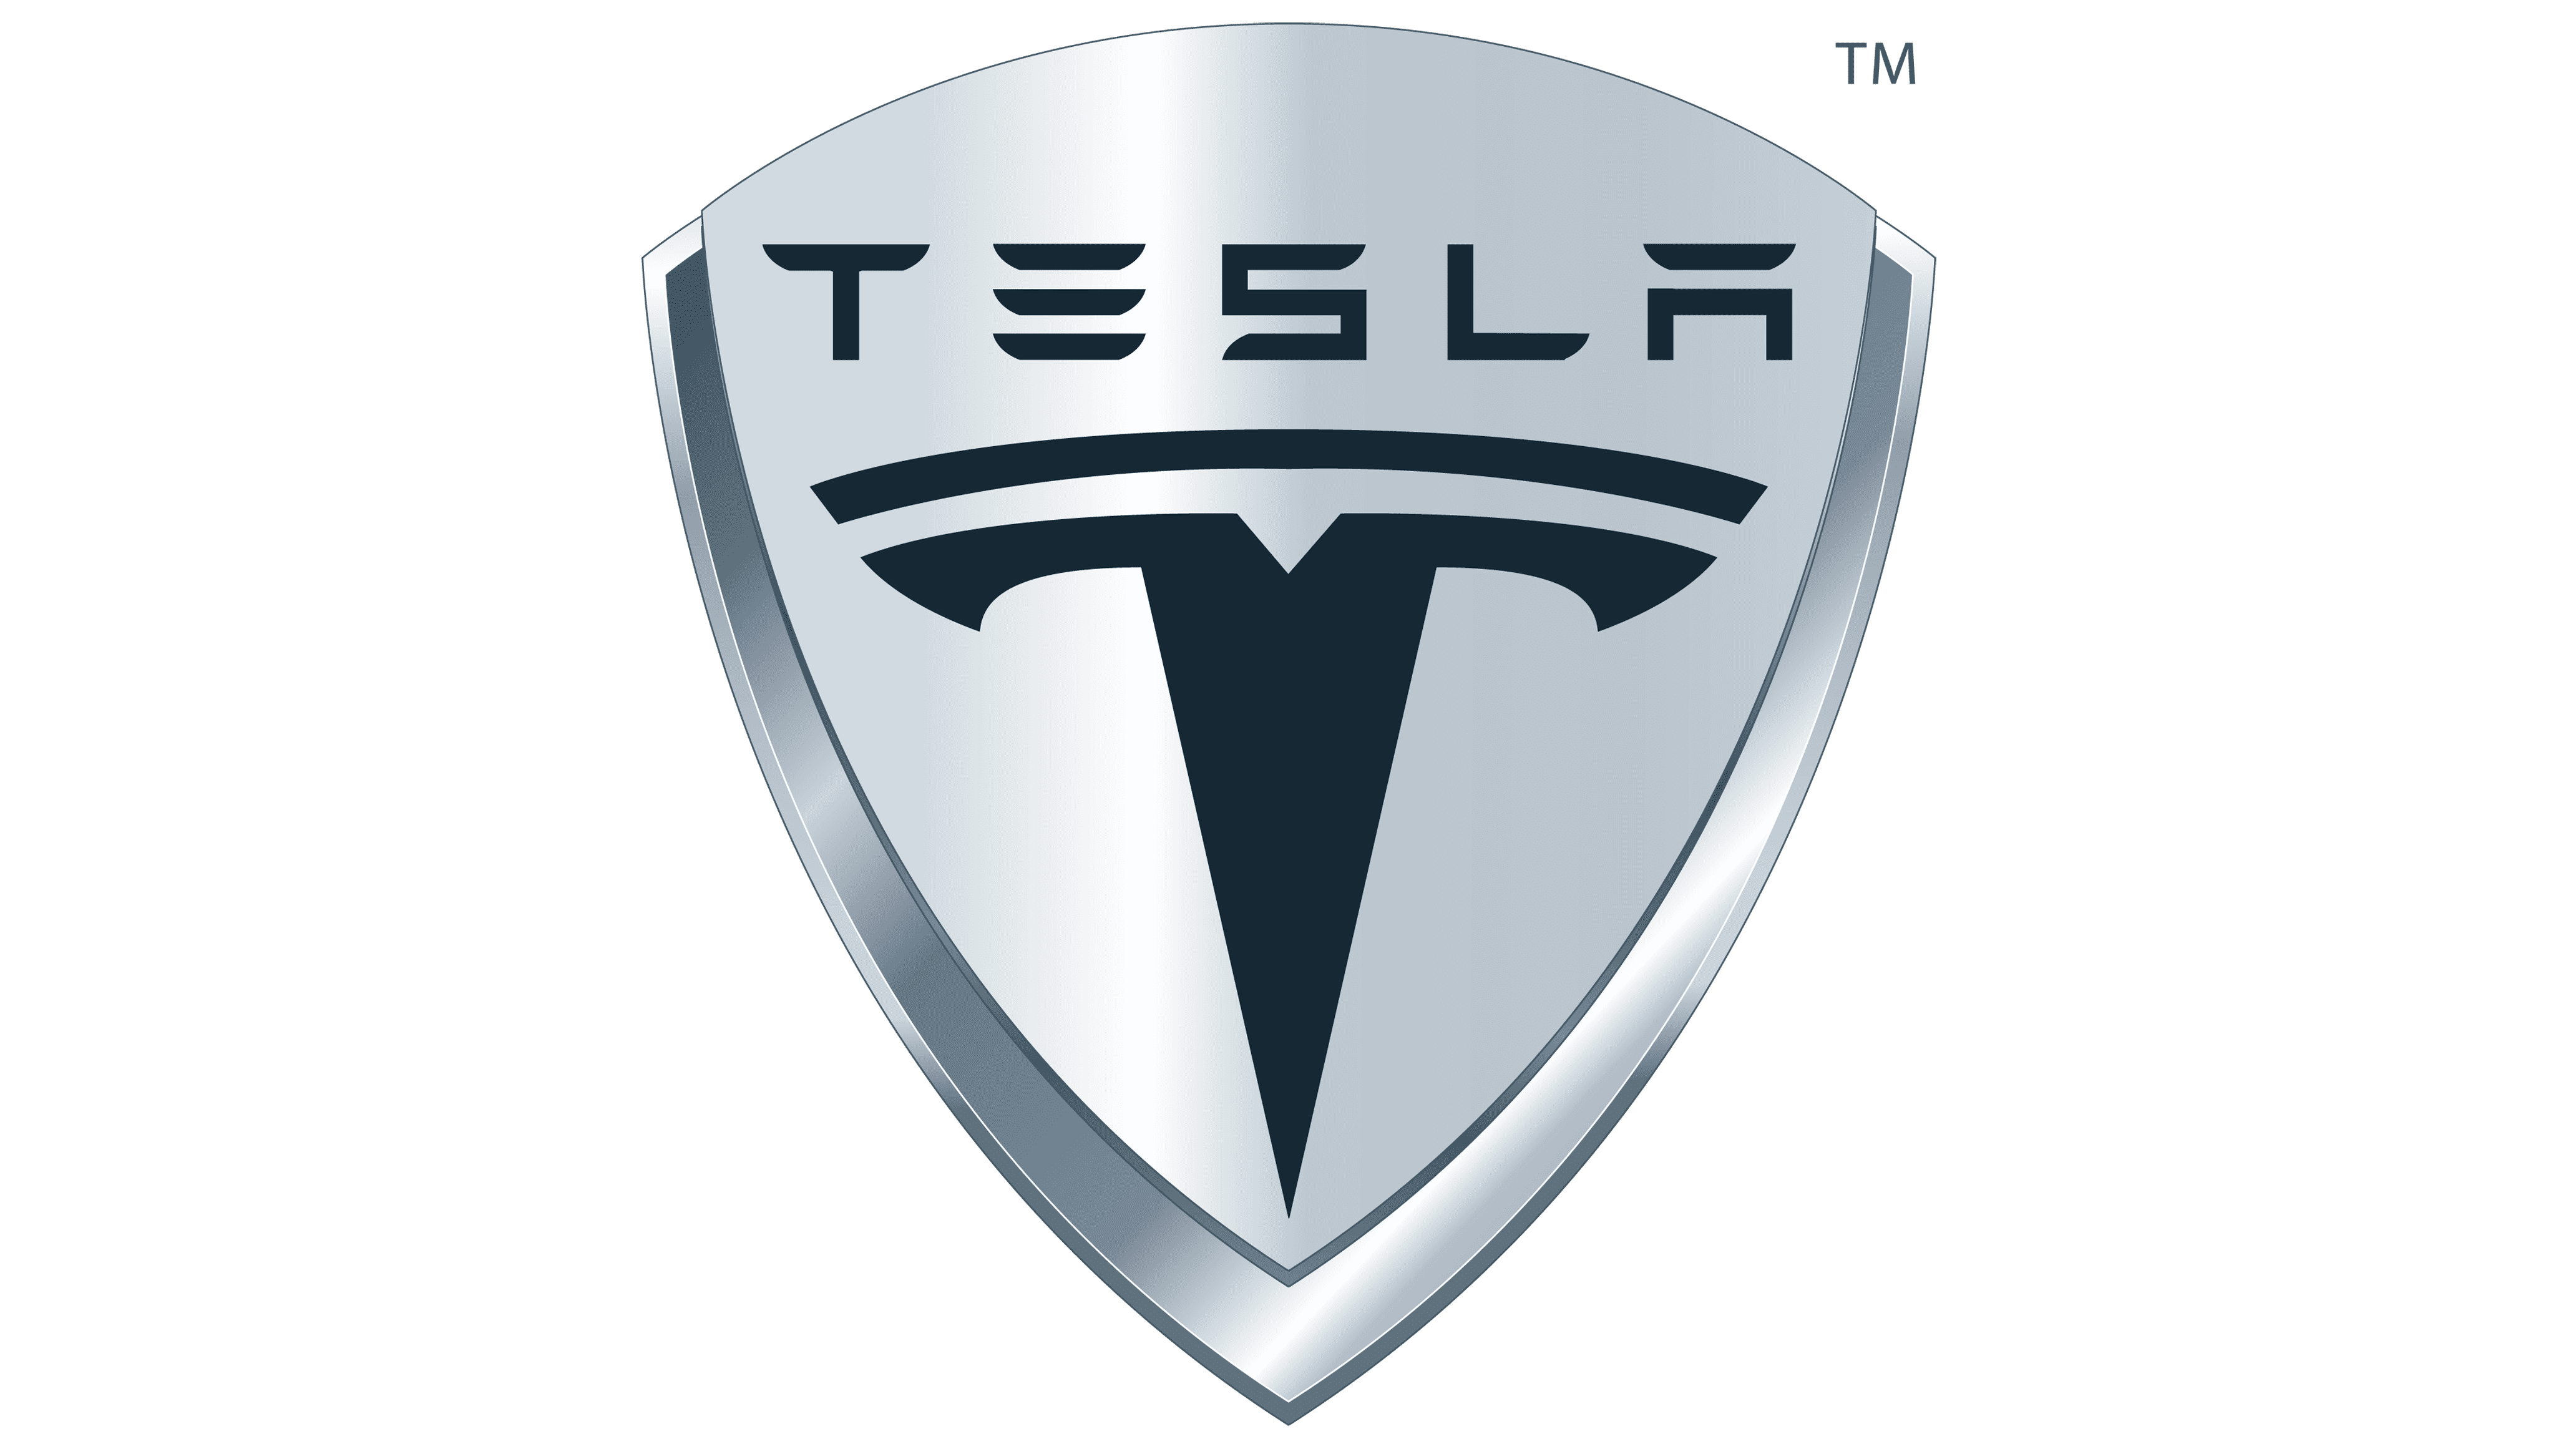 Tesla VIN decoder